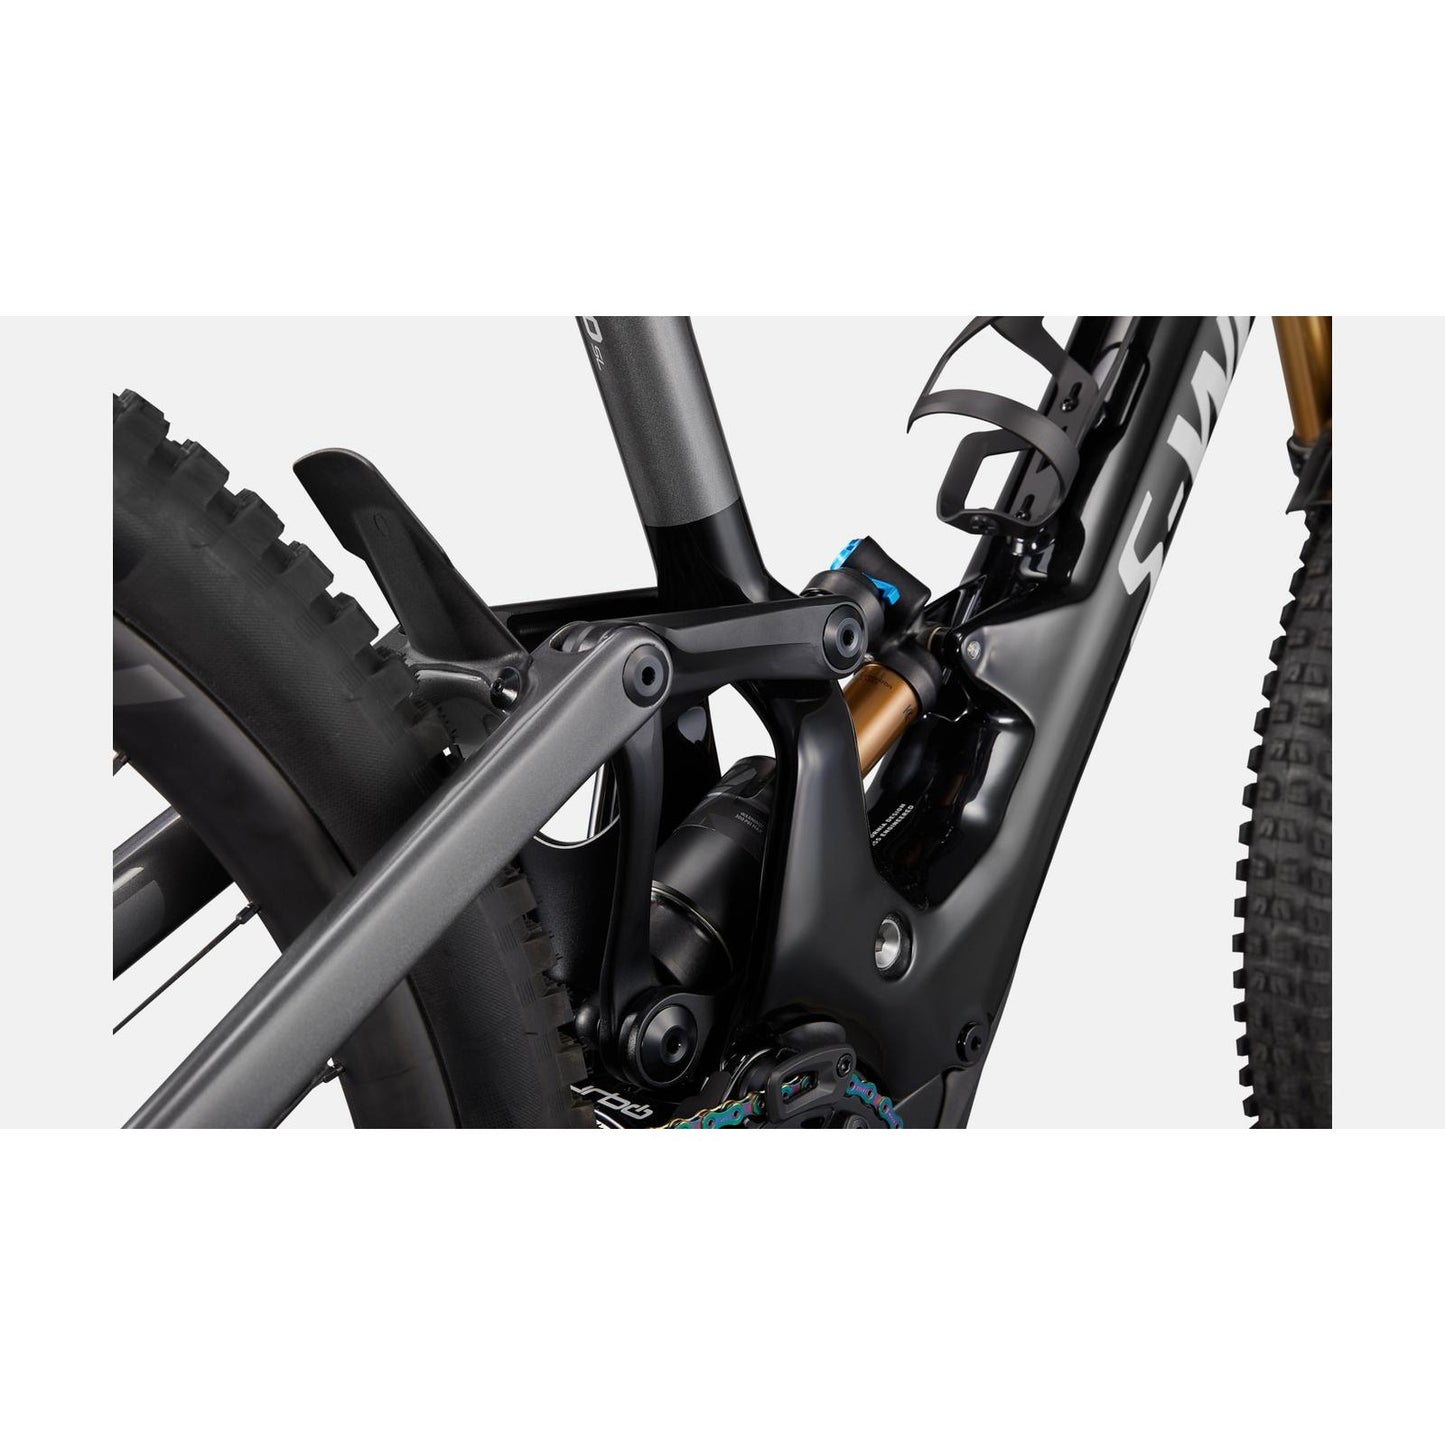 Specialized Kenevo SL S-Works Carbon 29" Electric Mountain Bike - Bikes - Bicycle Warehouse